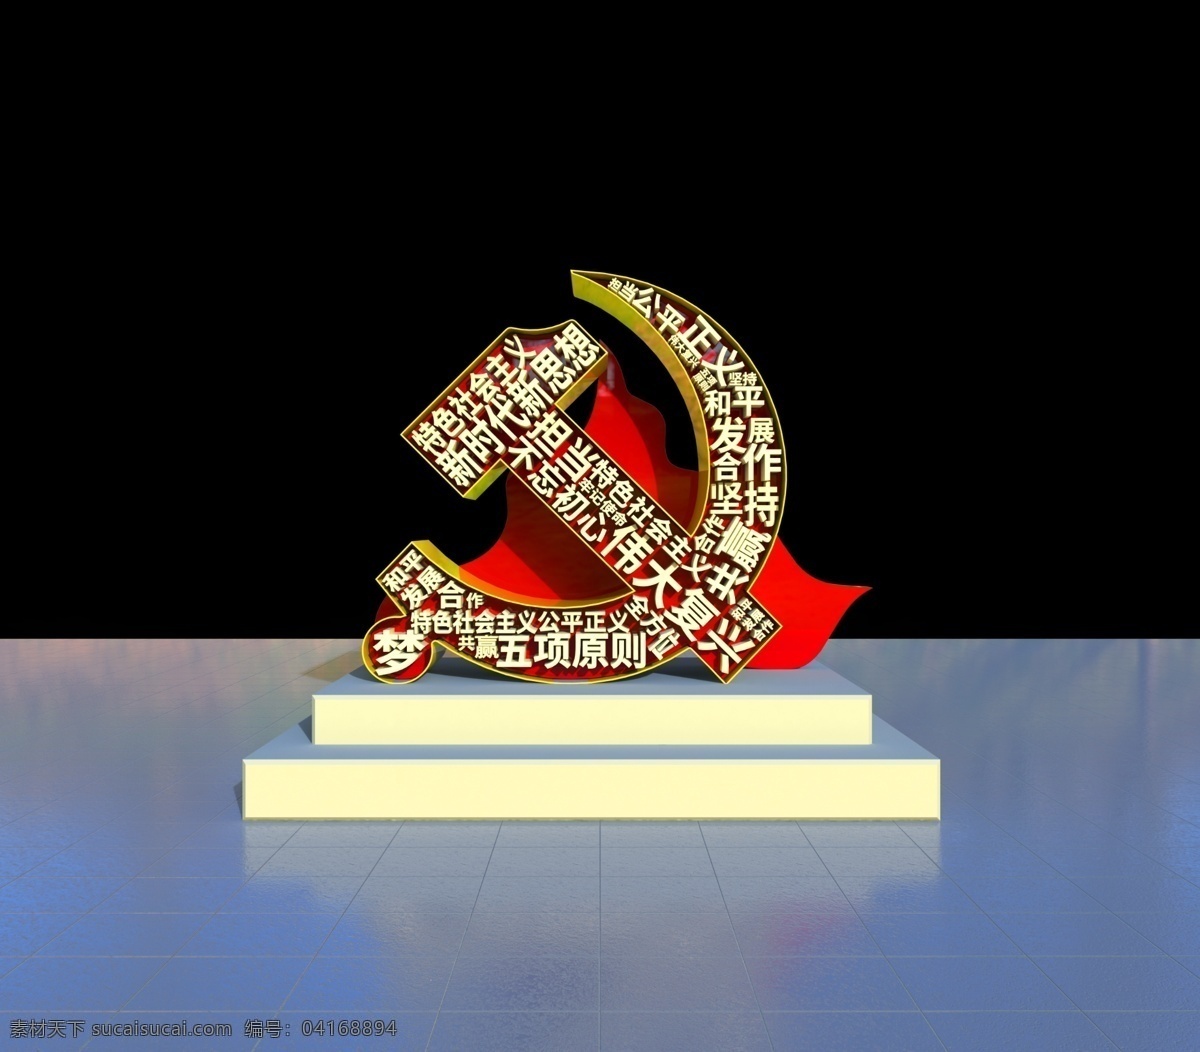 c4d 党建 广场 创意 文字 造型 文化 宣传 雕塑 牌 文化墙 中国梦 党徽 社会主义 口号 新时代